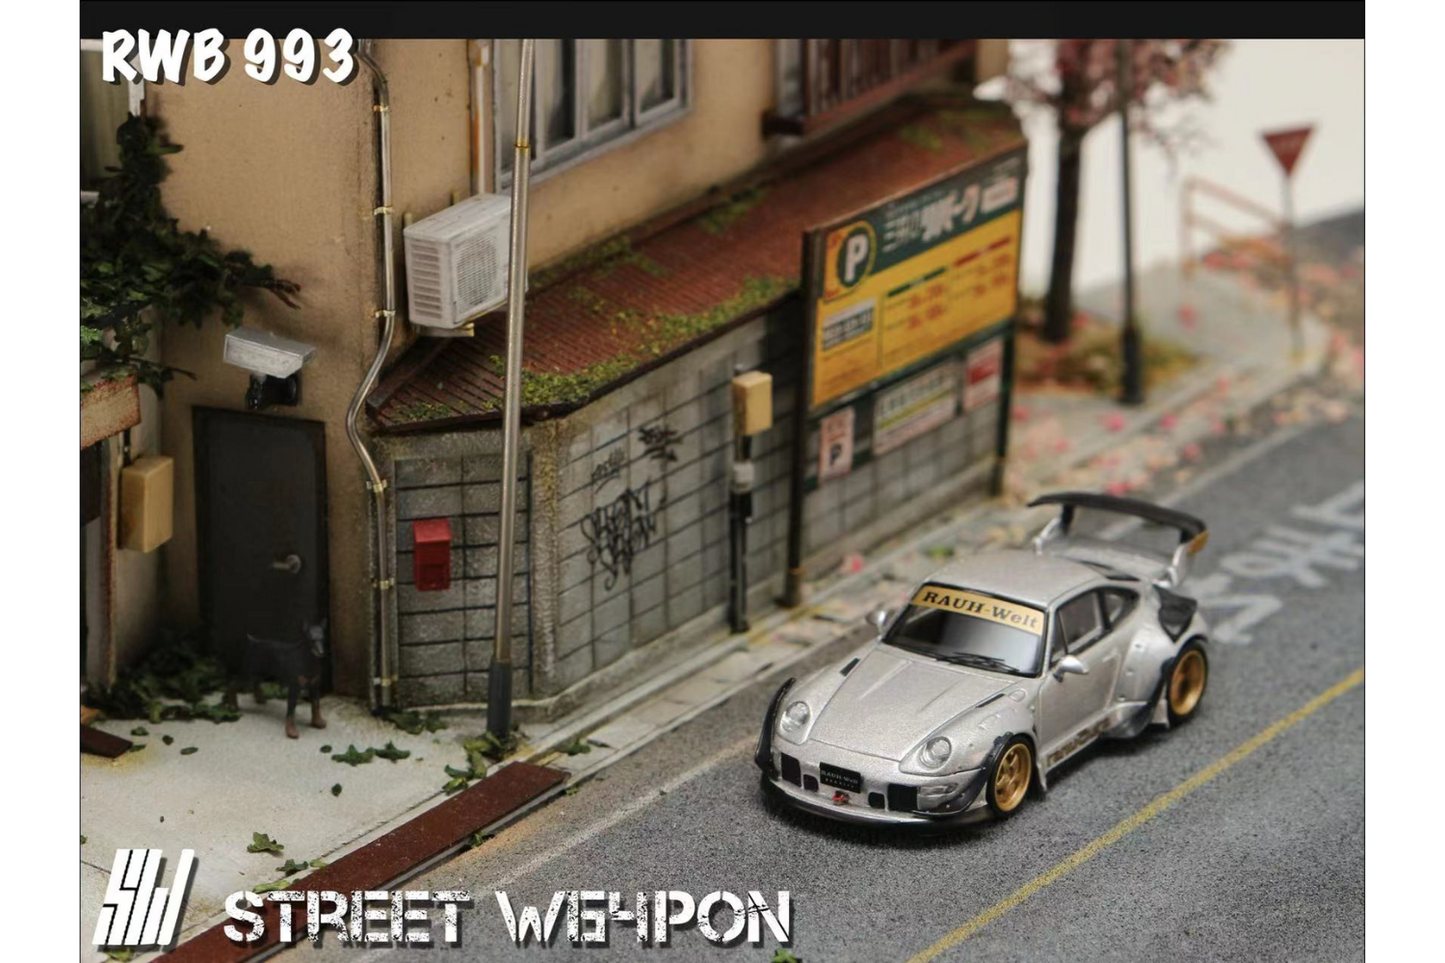 Street Weapon 1/64 Porsche Heavenly RWB 993 Ramintra in Silver